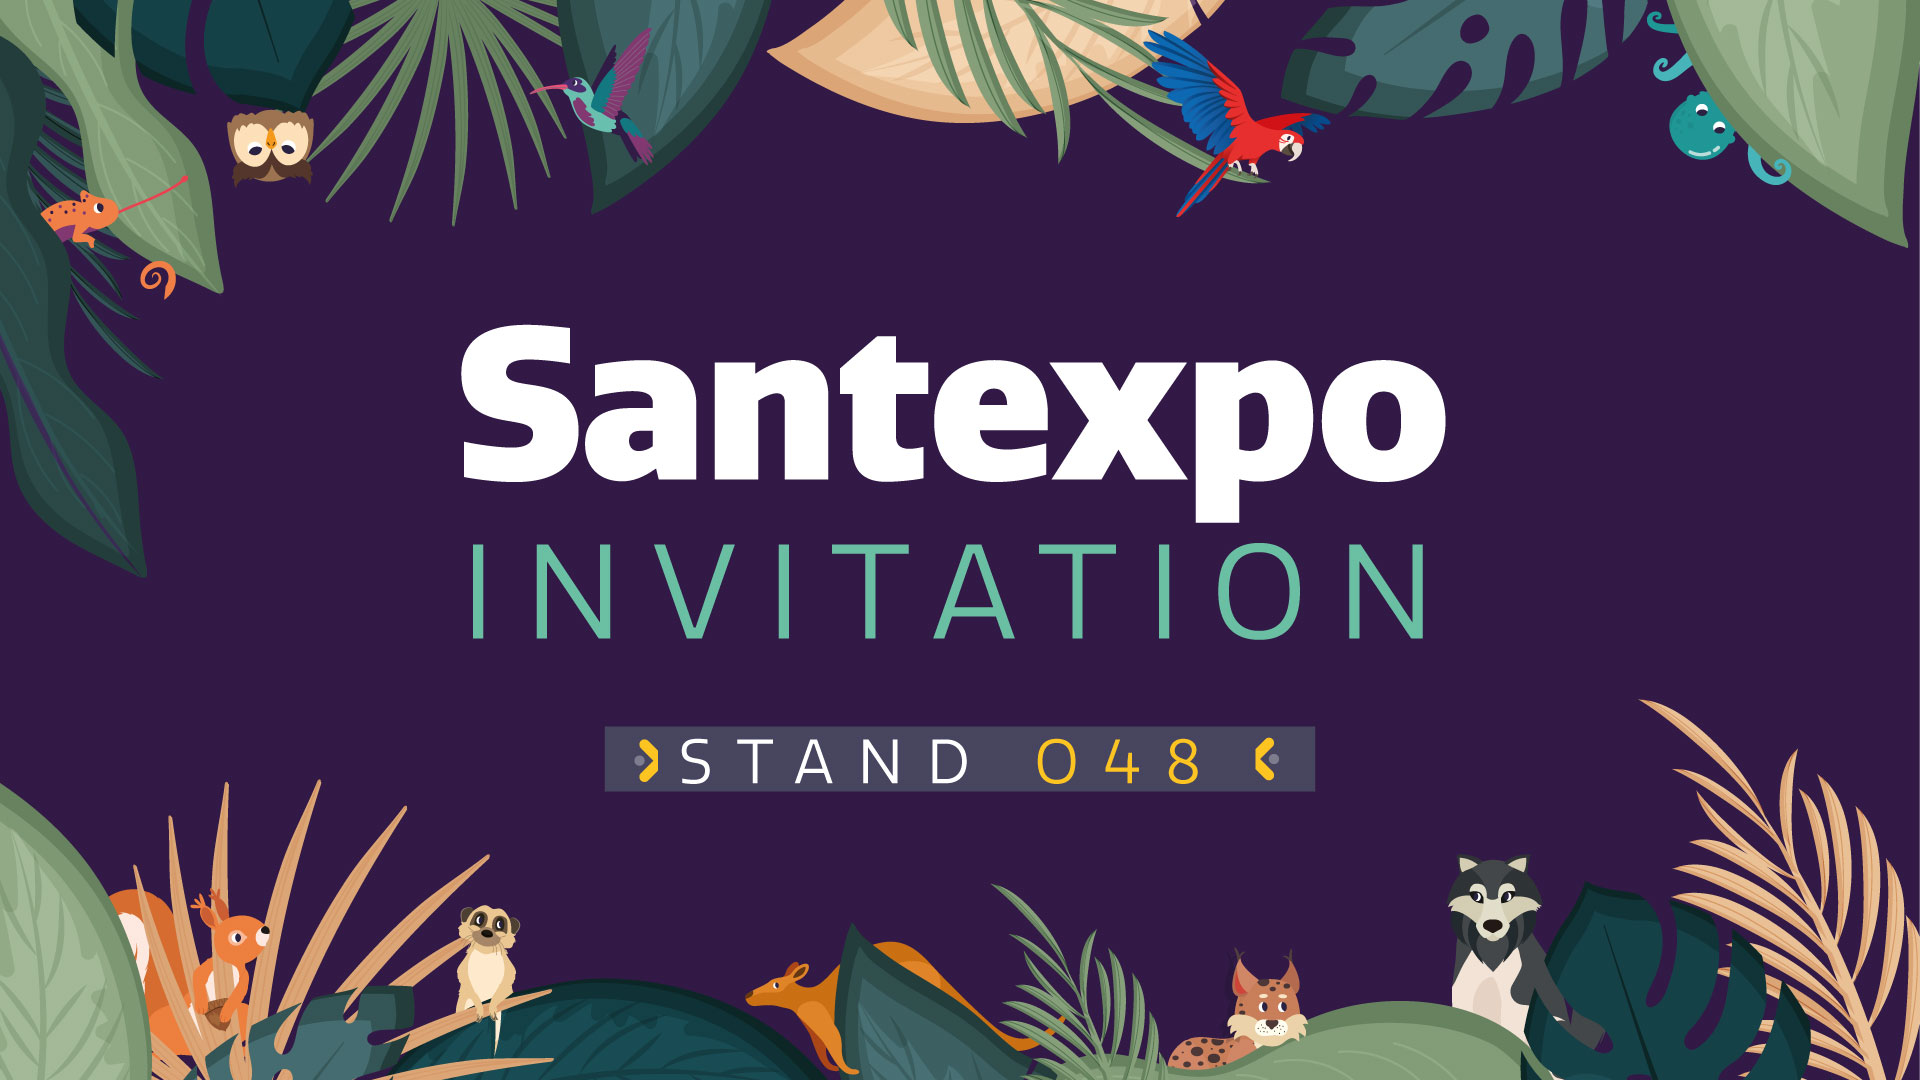 Invitation Santexpo